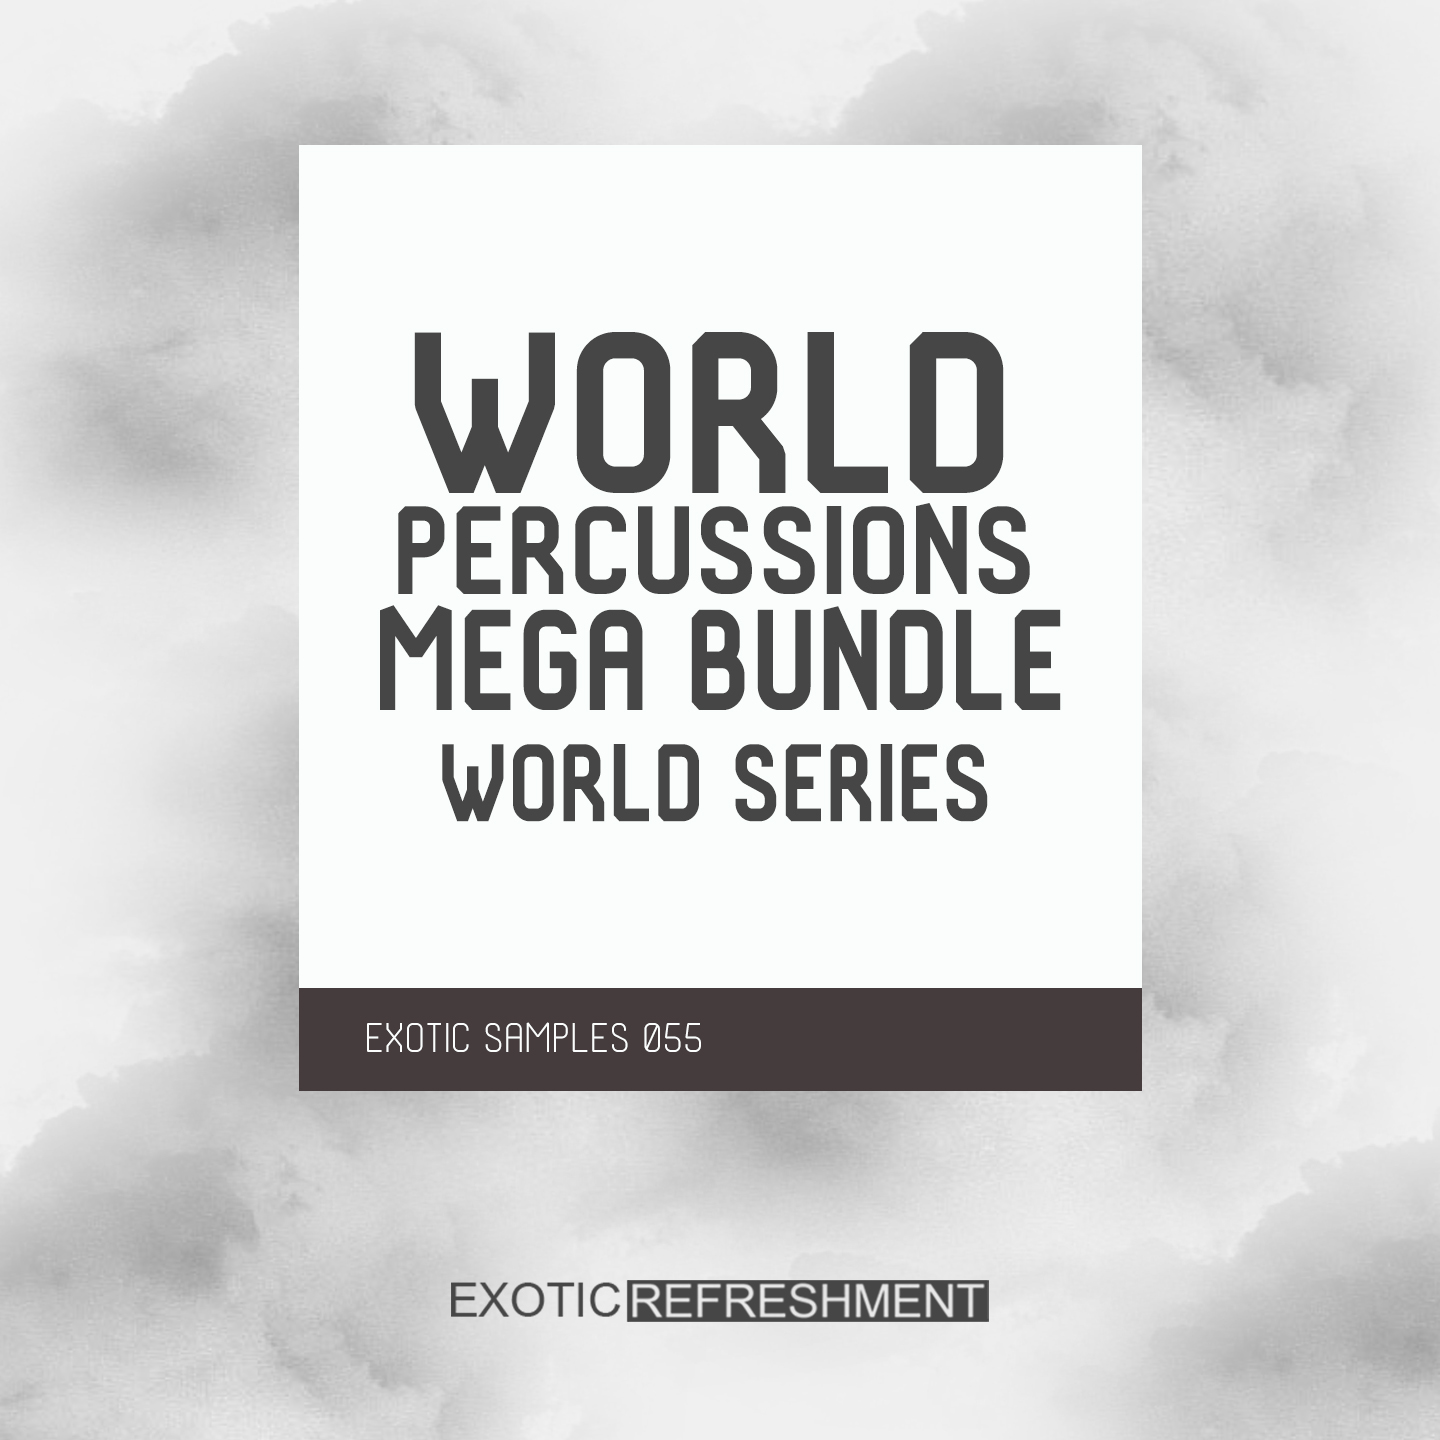 World Percussions Mega Bundle